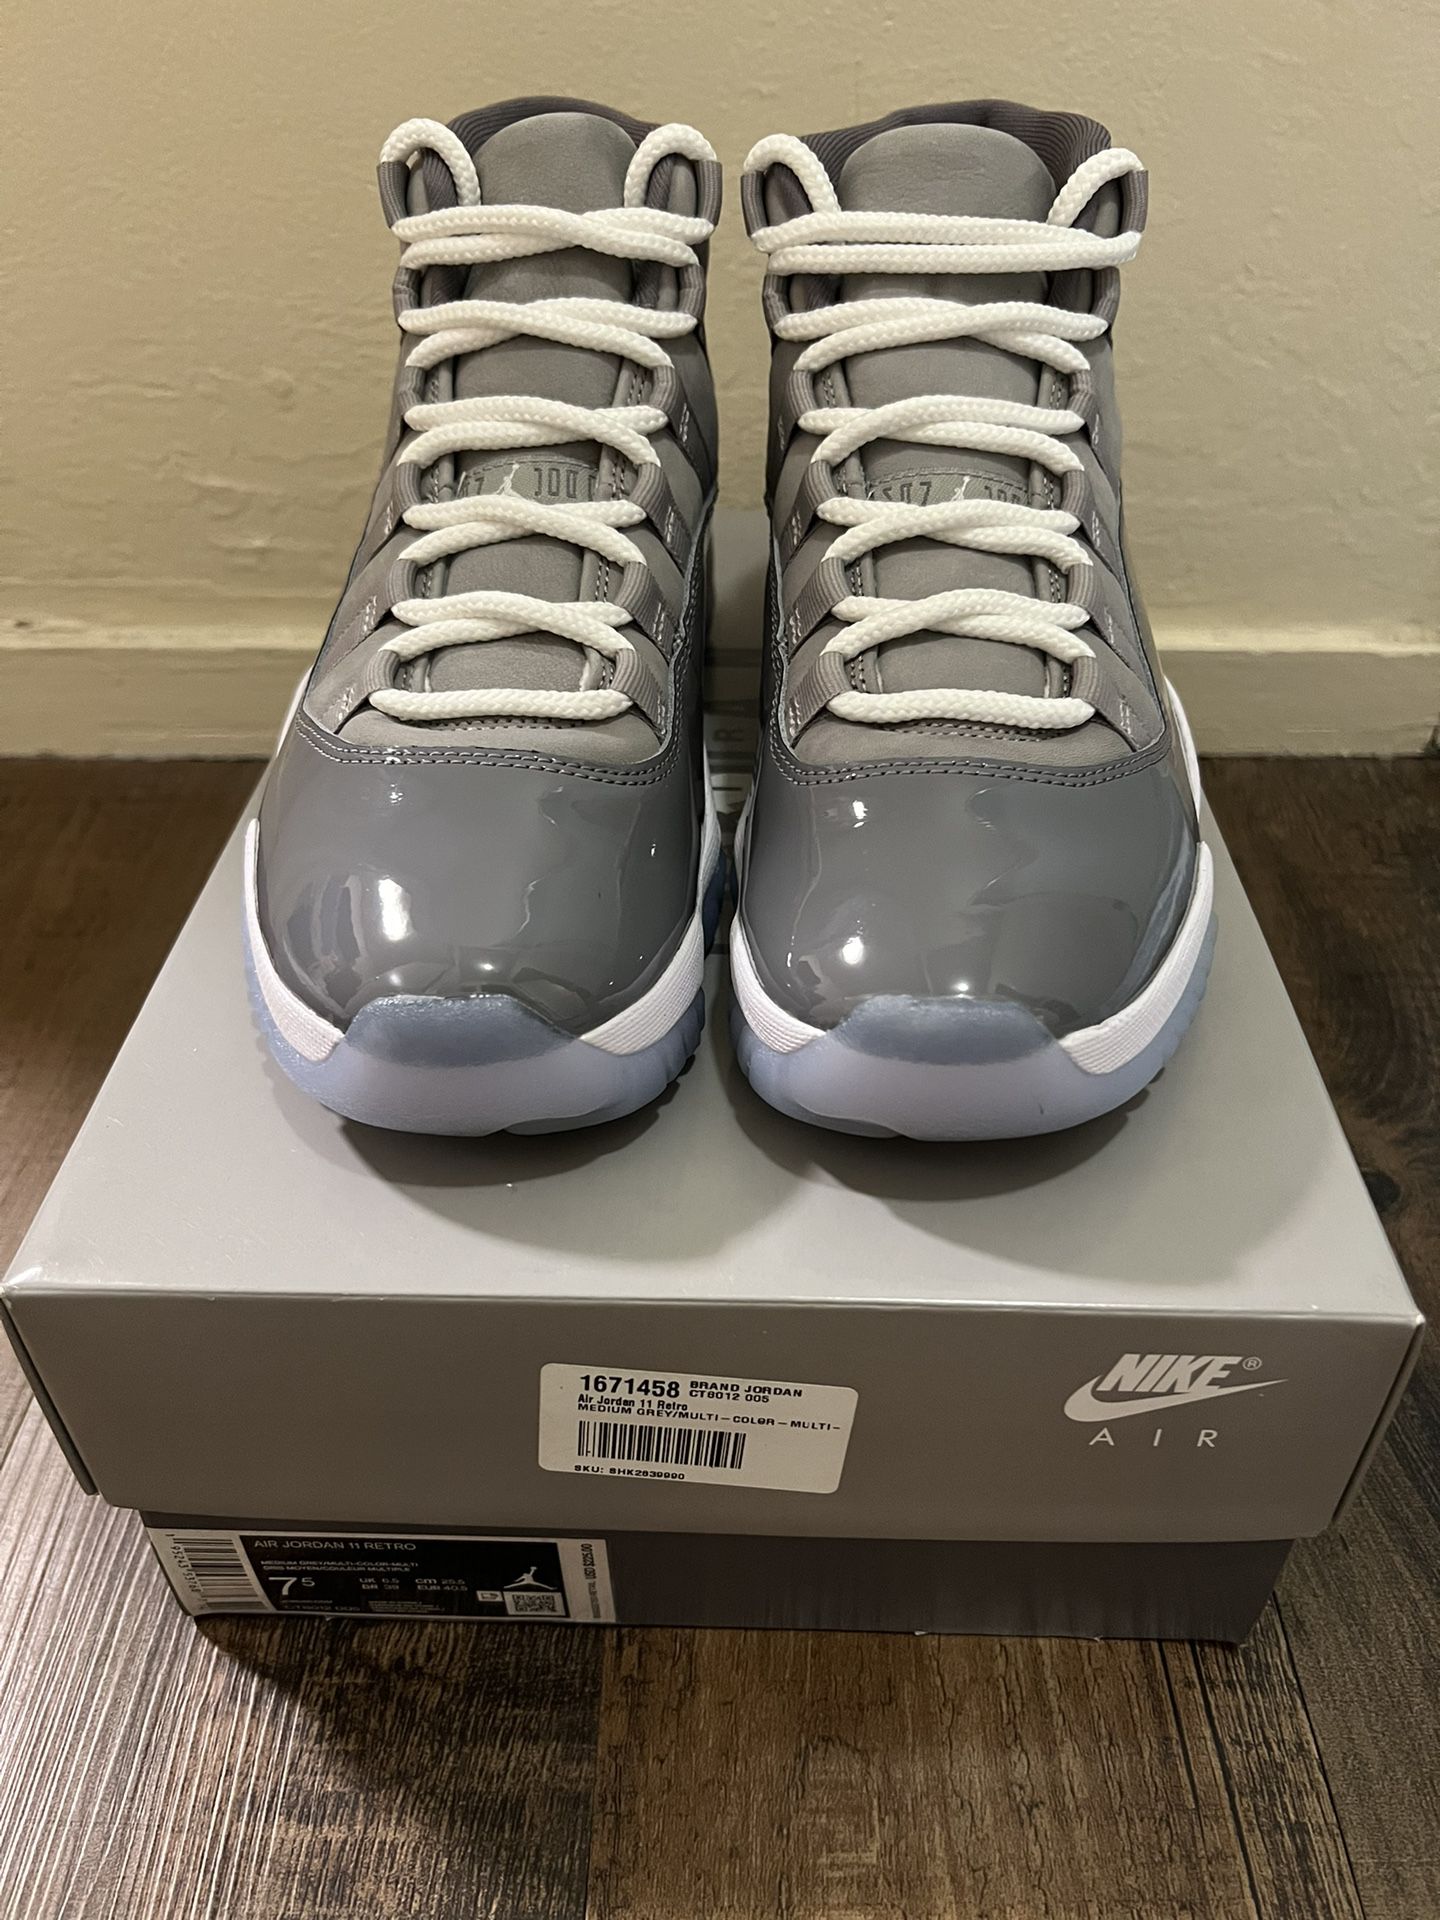 Jordan 11 retro cool grey (2021) size 7.5 mens